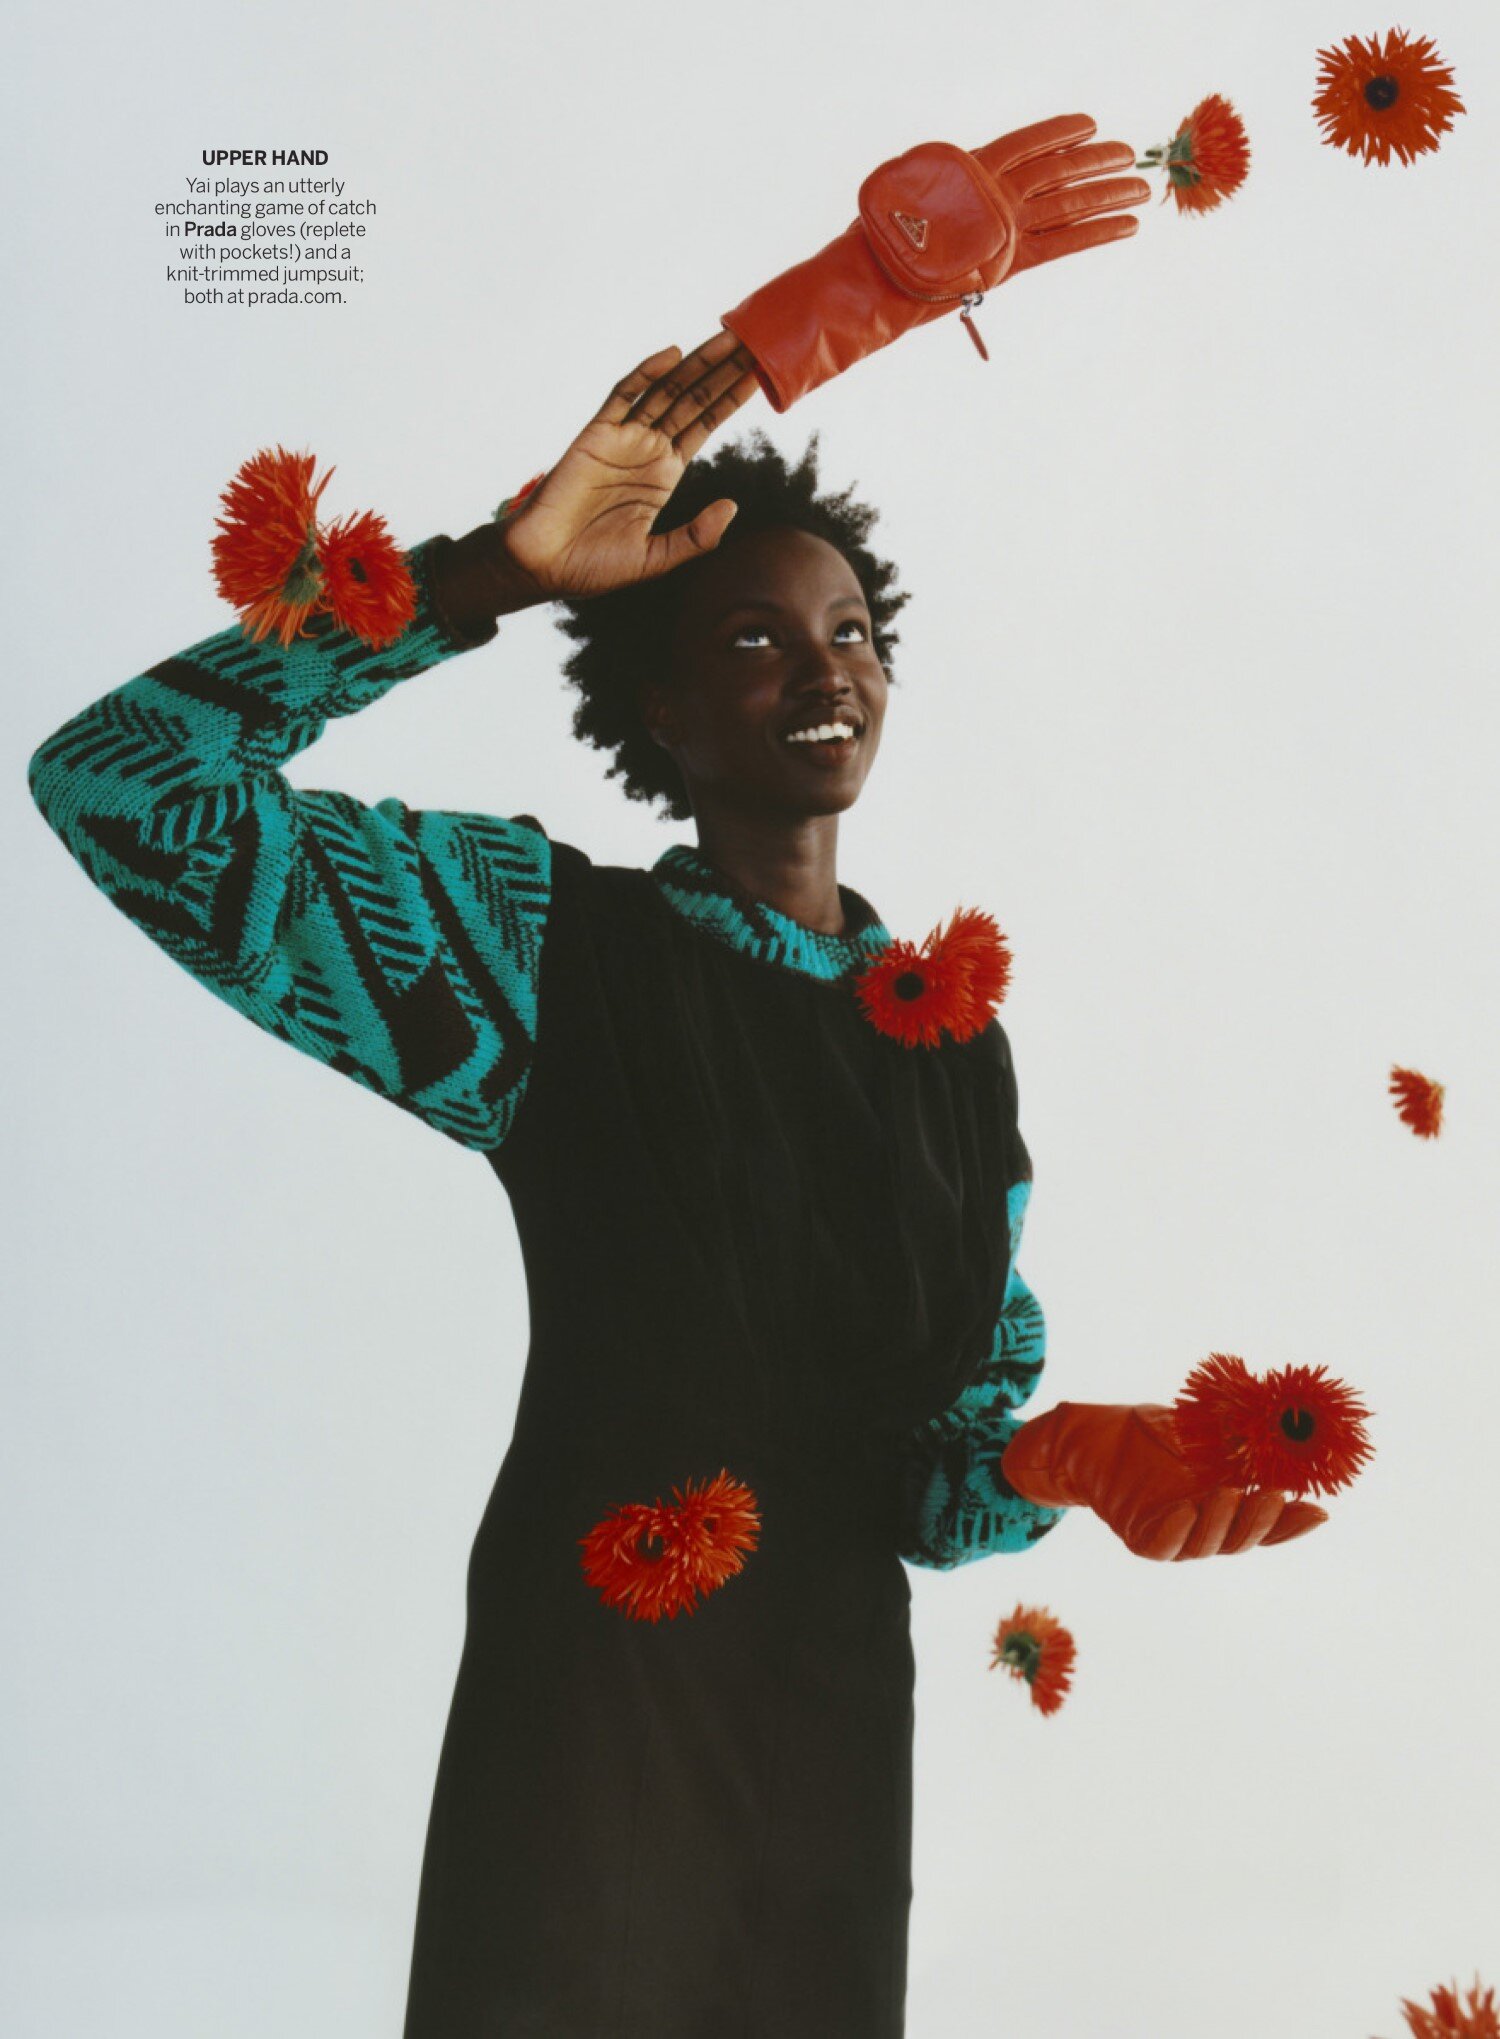 Anok-Yai-by-Theo-de-Gueltzl-for Vogue-US-August-2021 (3).jpg